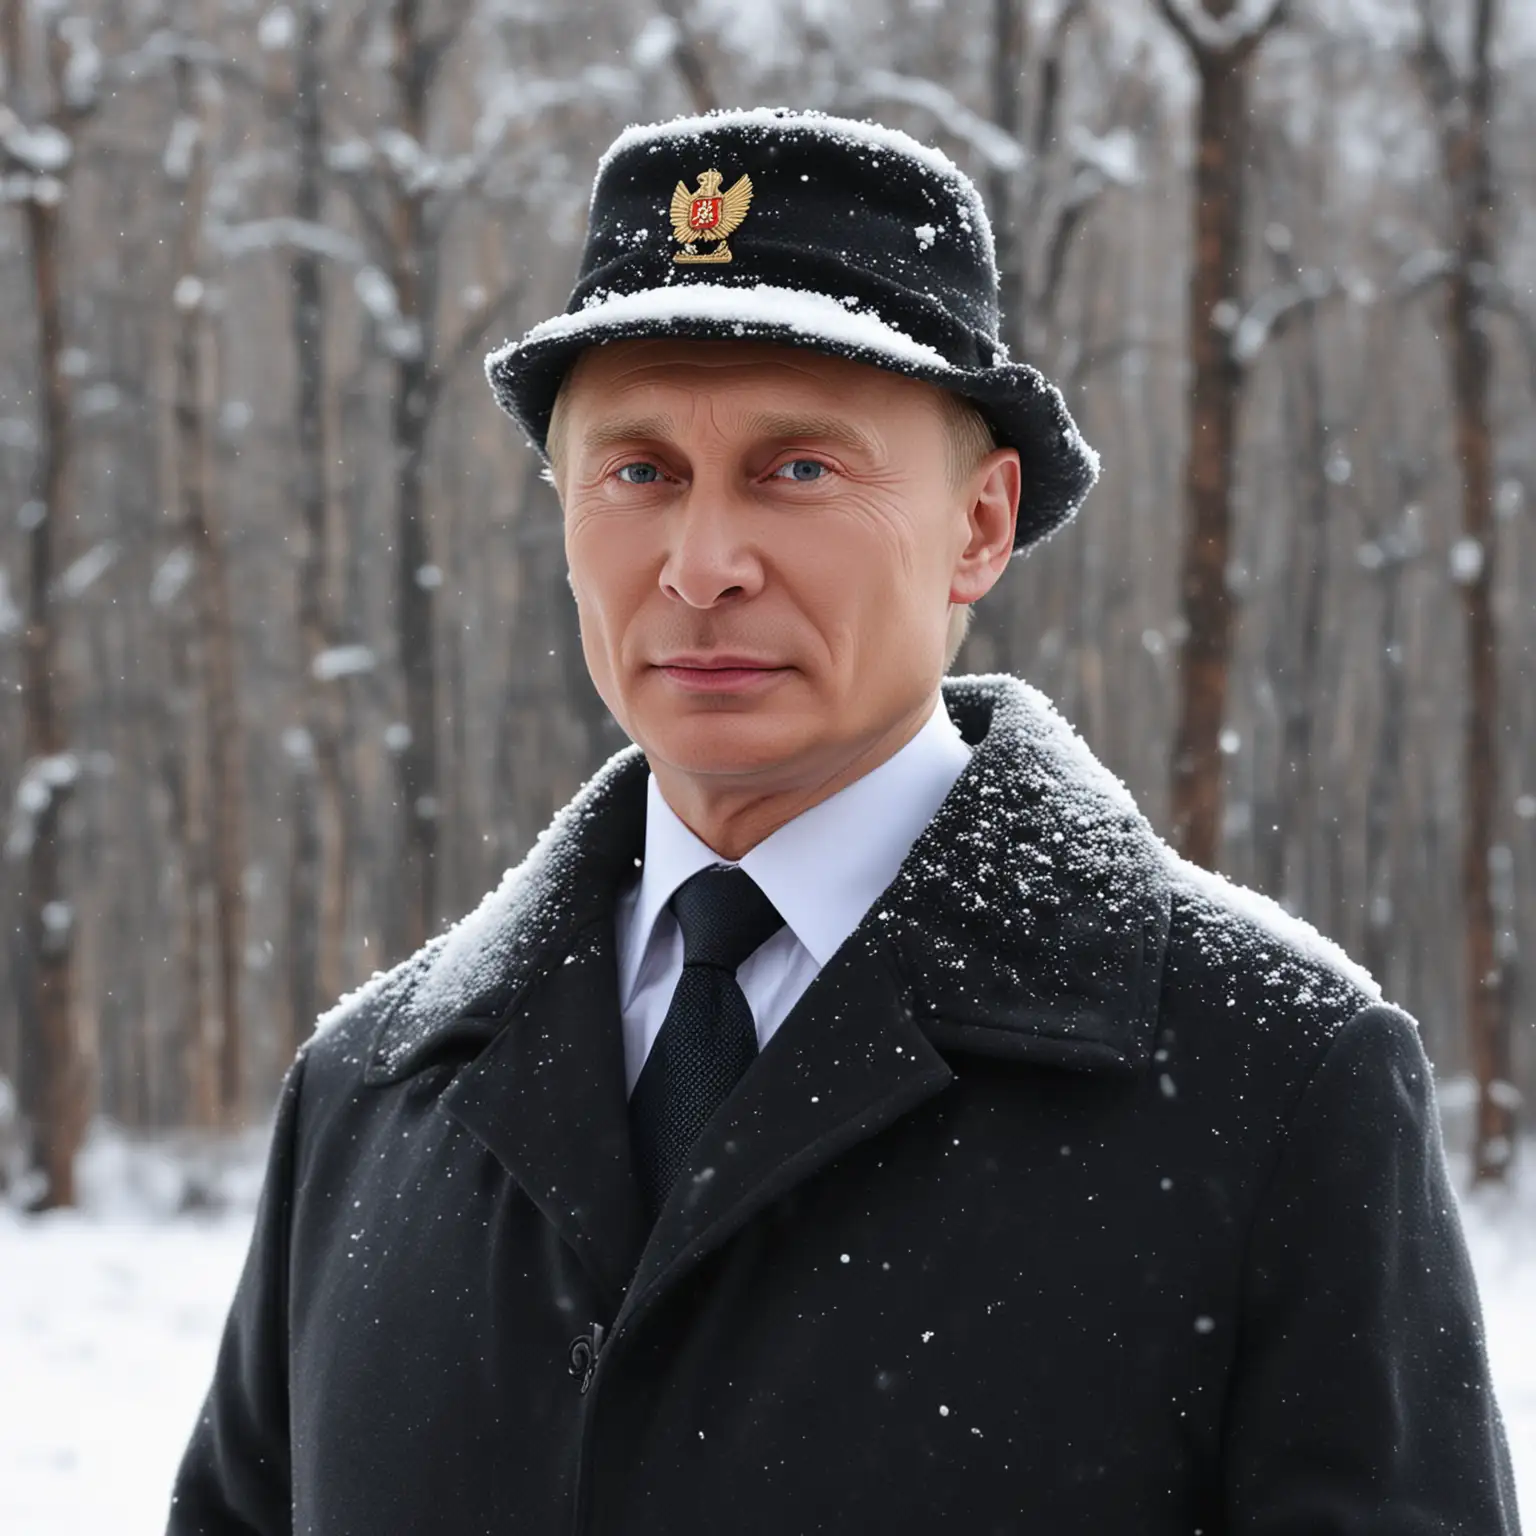 Vladimir-Putin-Wearing-Traditional-Russian-Ushanka-Hat-in-Snowy-Landscape